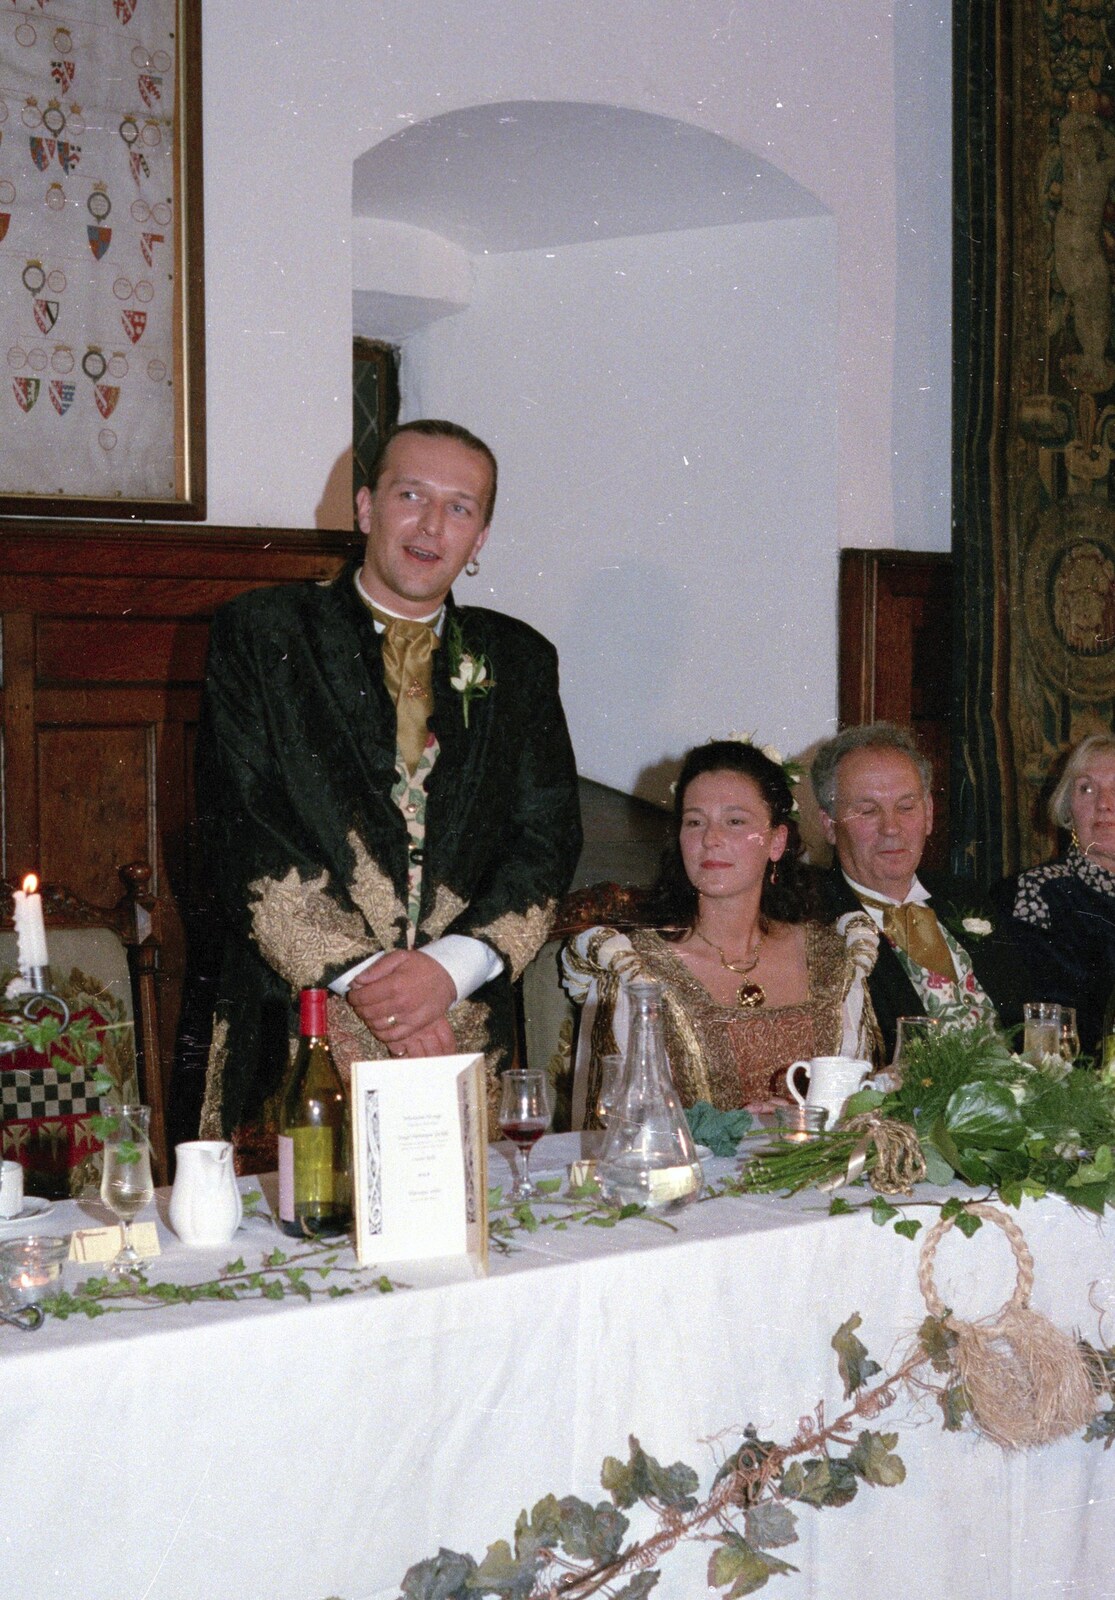 Stuart gives a speech from Stuart and Sarah's CISU Wedding, Naworth Castle, Brampton, Cumbria - 21st September 1996